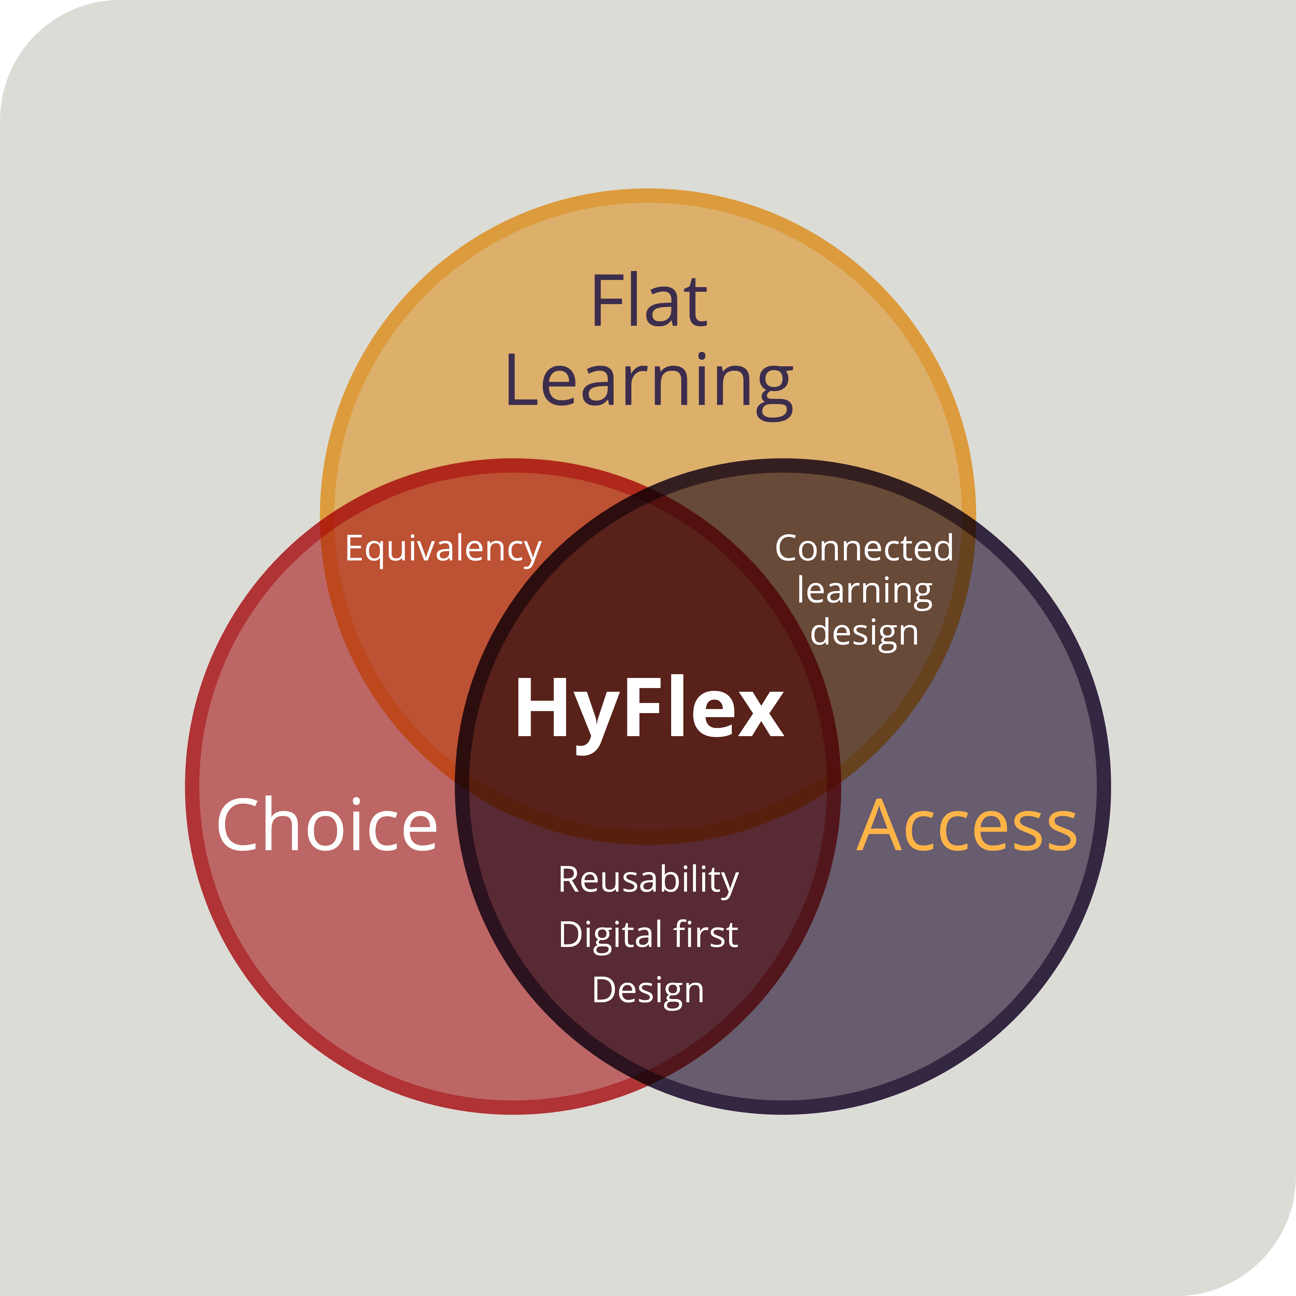 Attributes of HyFlex